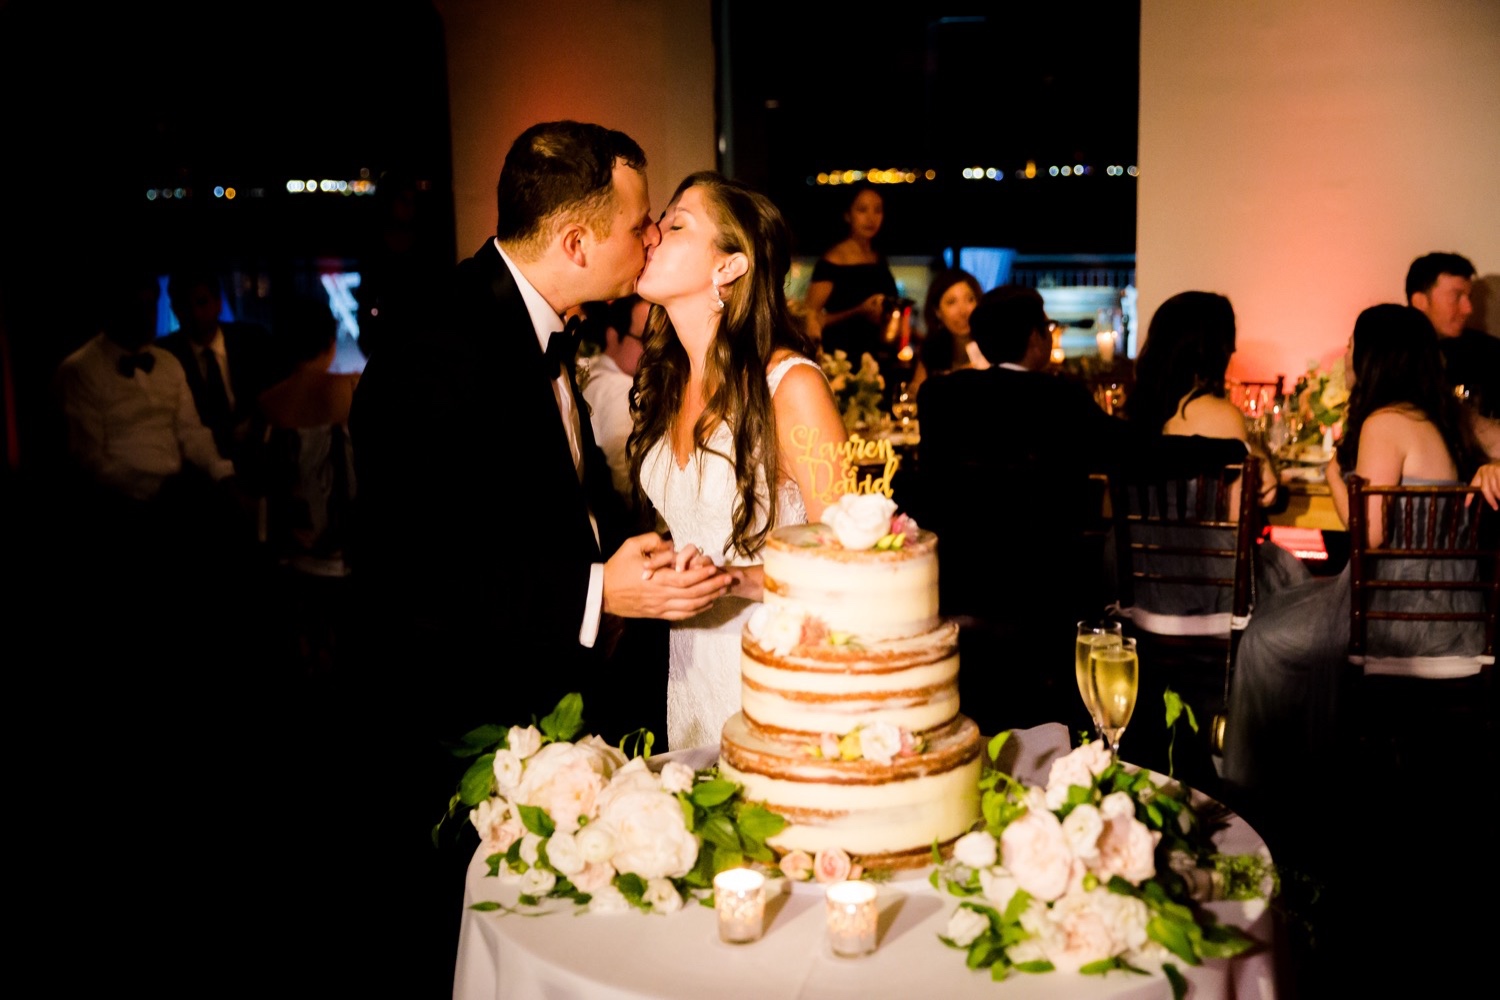 A newly wedded couple cutting their wedding cake during a wedding reception at Liberty Warehouse, Brooklyn New York. 